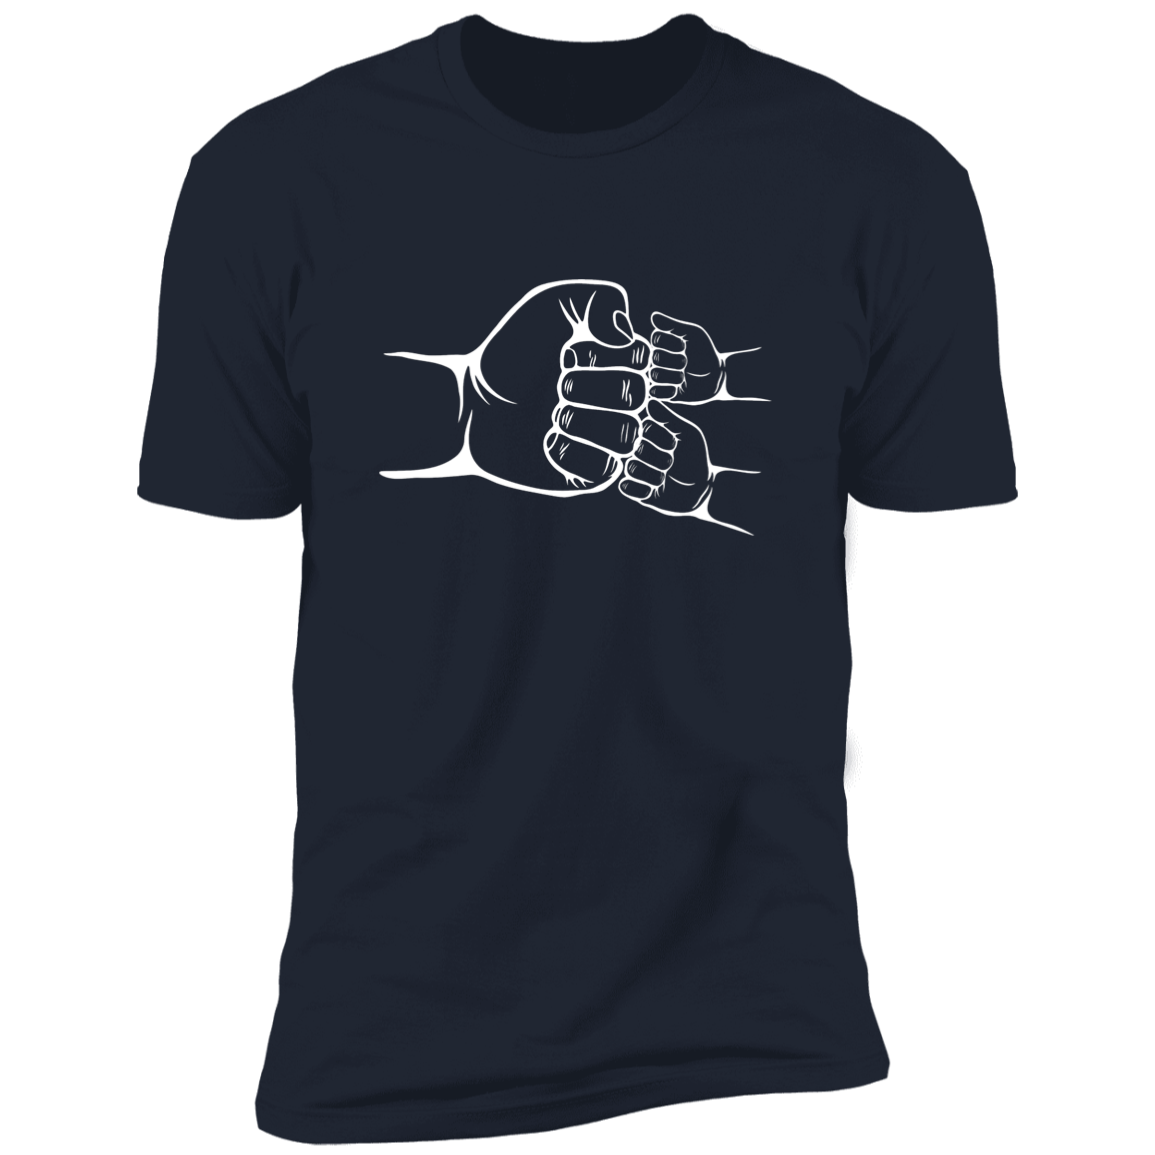 Midnight Navy Shirt Short Sleeve - 3 Fist Bump